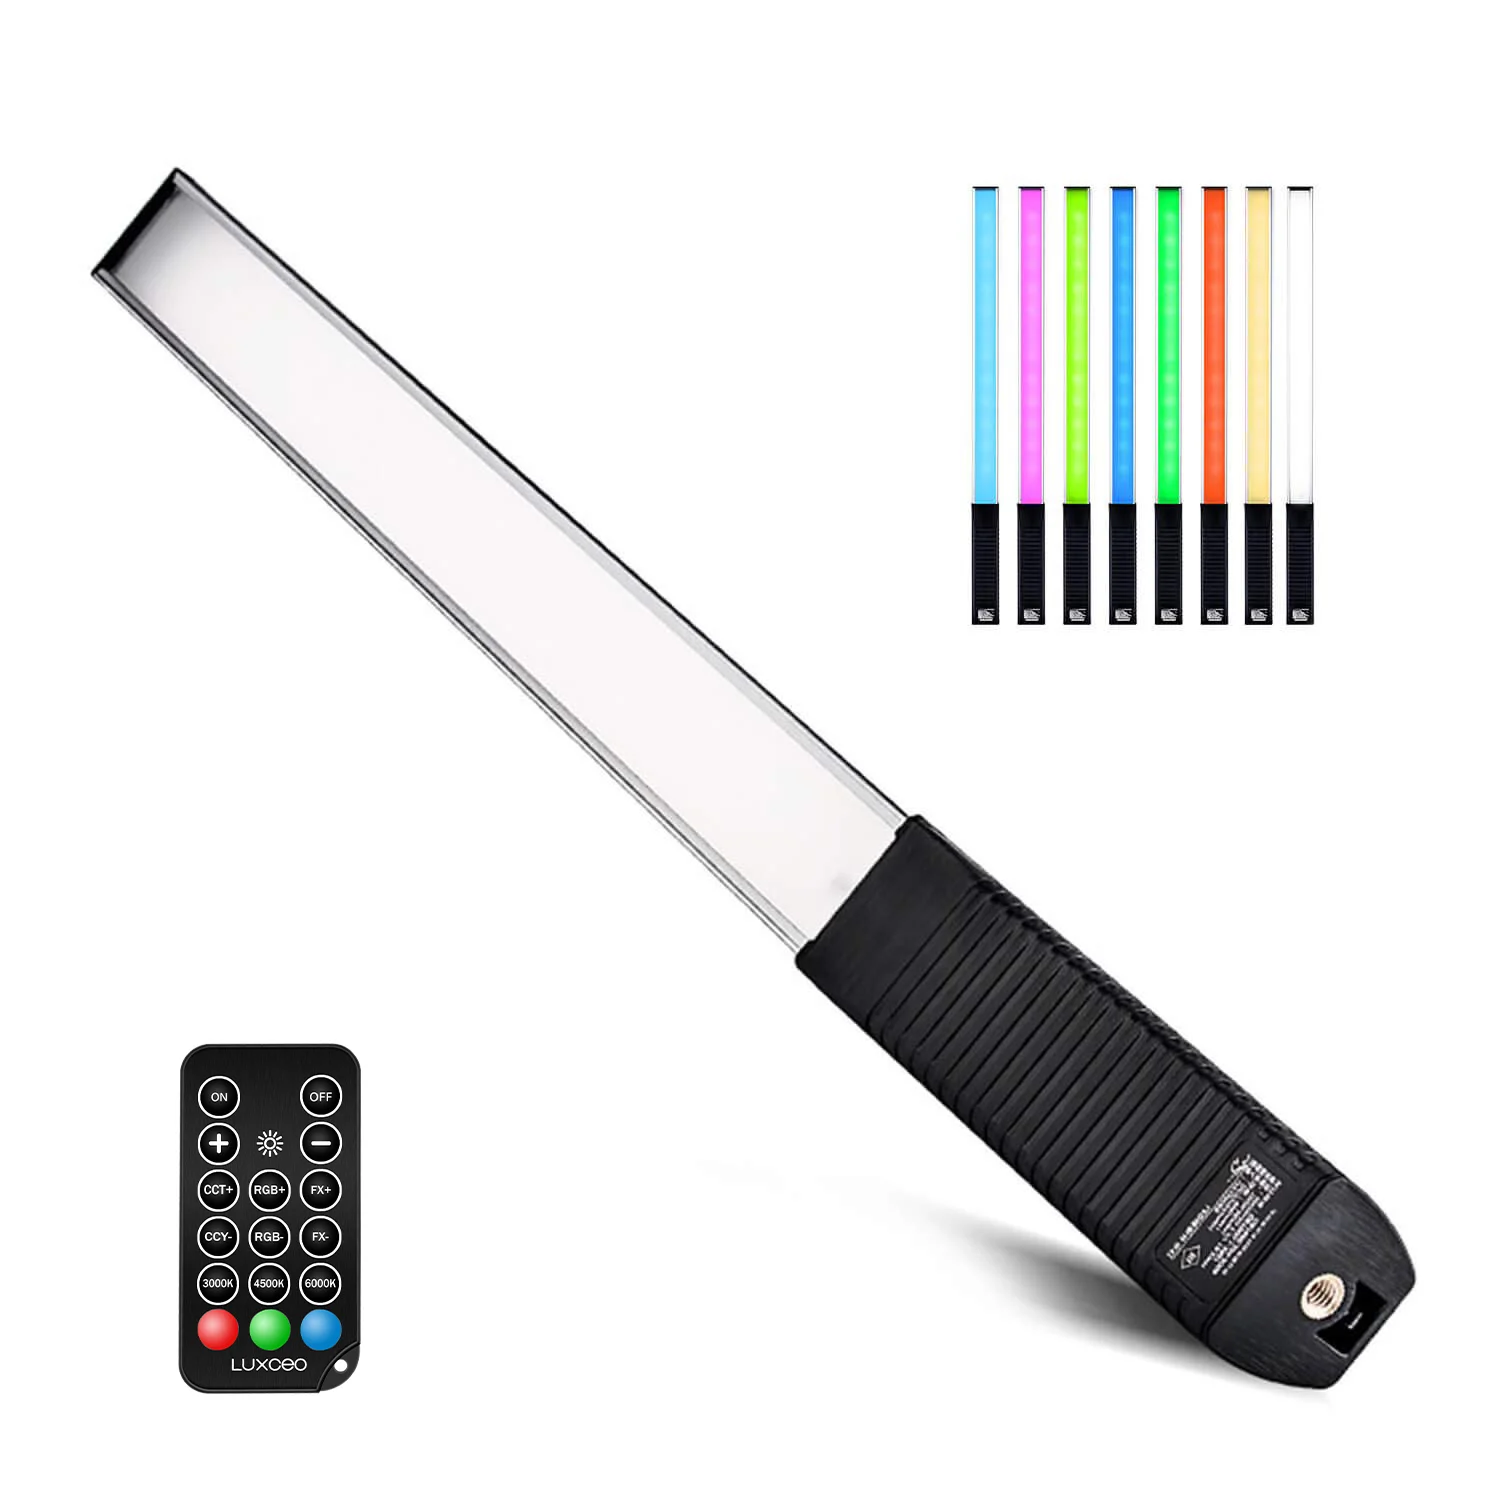 LUXCEO Q508A LED RGB Video Light Baton Remote Control 3000K-6000K 36Colors Studio Photo Lighting Bar For Youtube TikTok Vlog